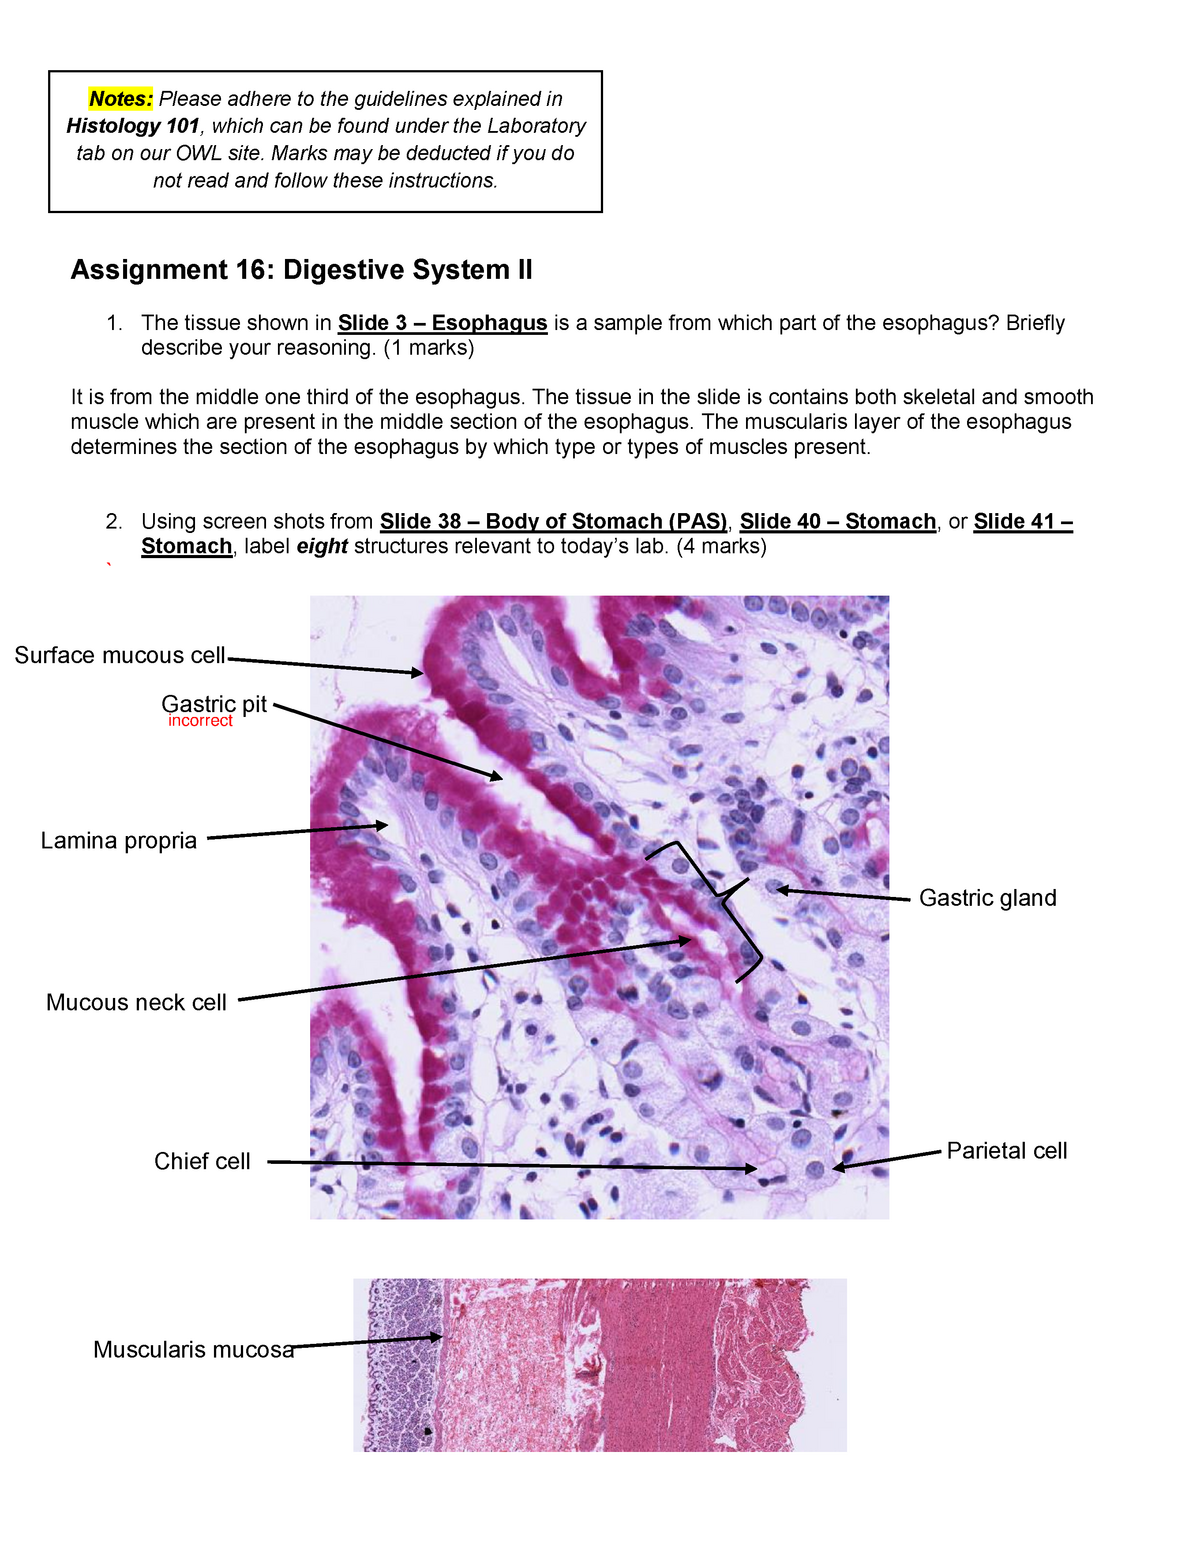 Lab Assignment 16: Digestive System 2 - Mammalian Histology - StuDocu